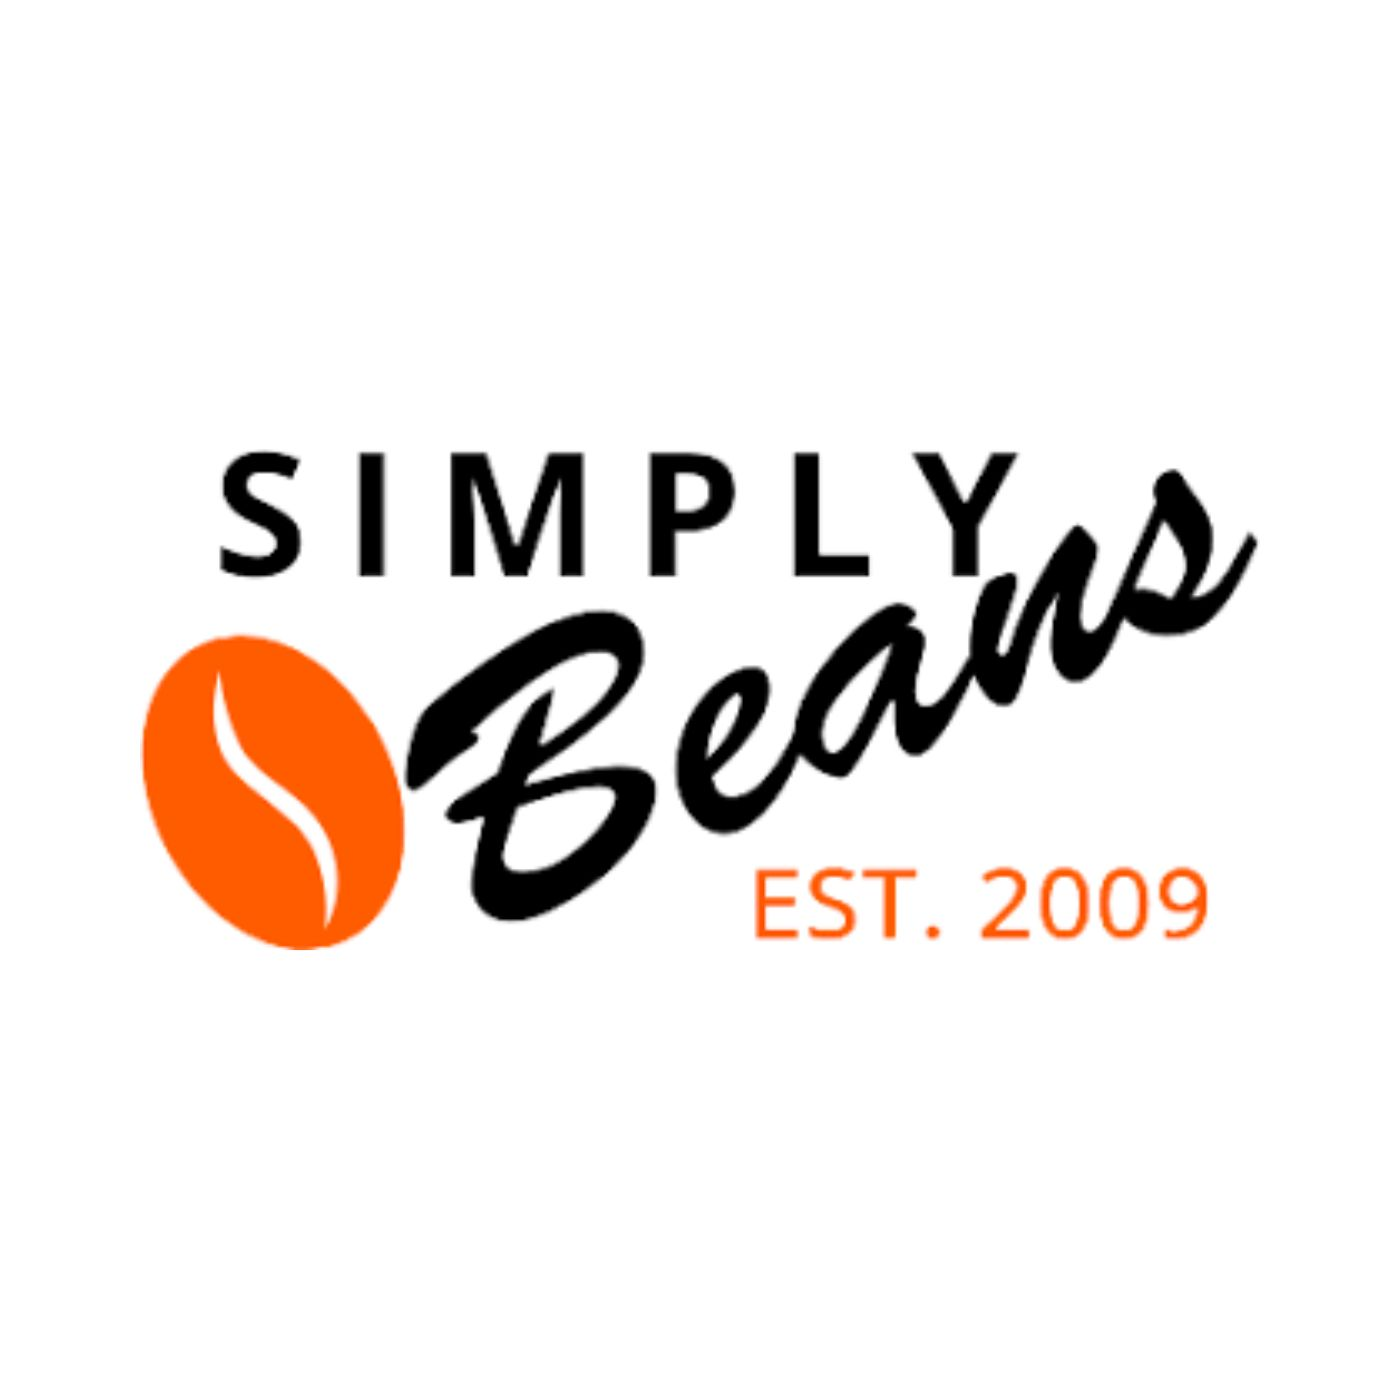 Simply Beans